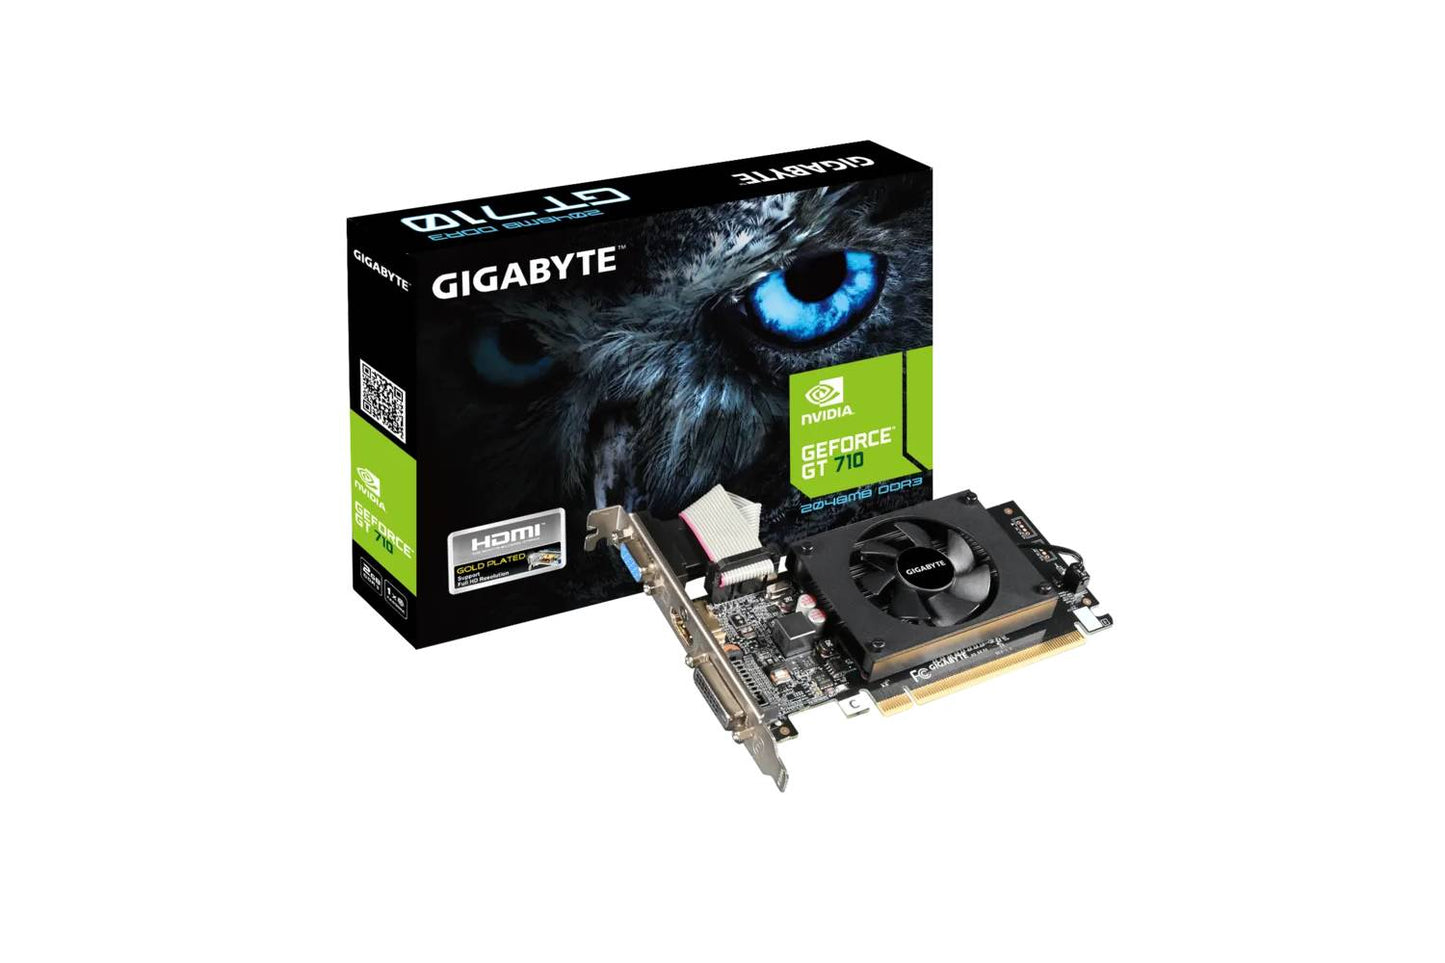 Gigabyte GeForce GT 710 Graphics Card